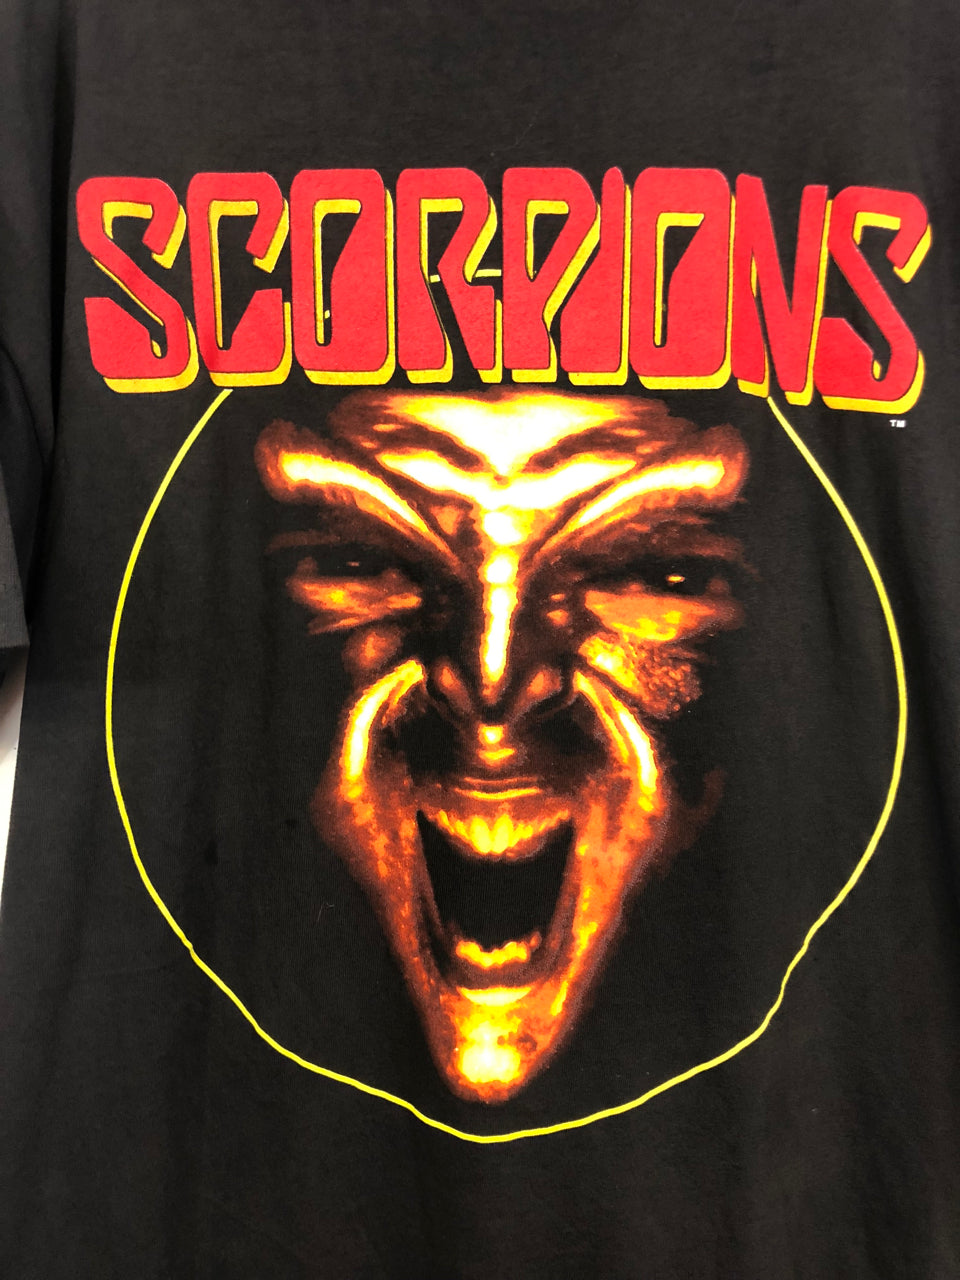 Scorpions Face the Heat 1994 Tour T-Shirt